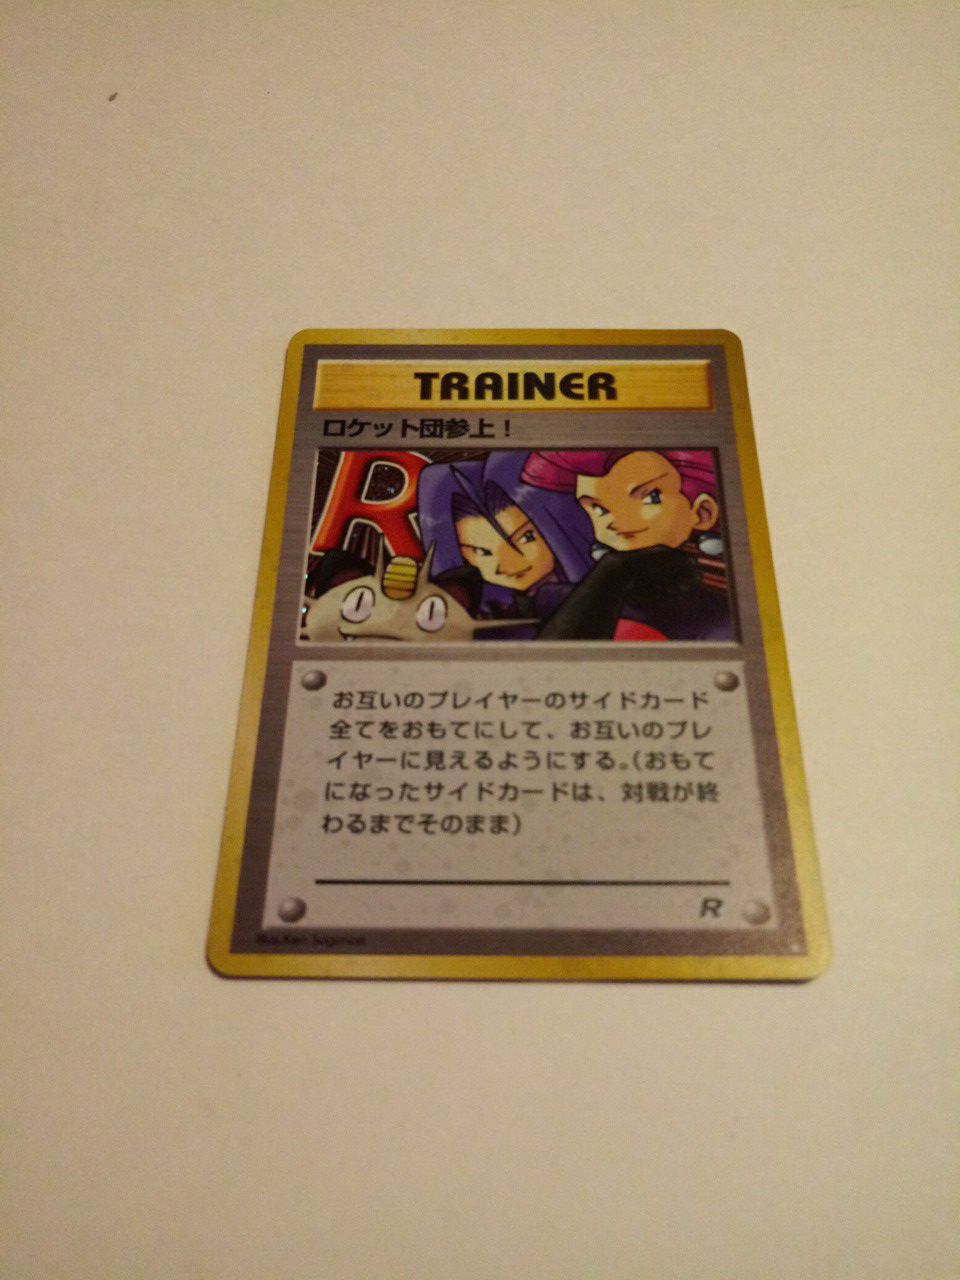 1996 team rocket pokemon card jap.